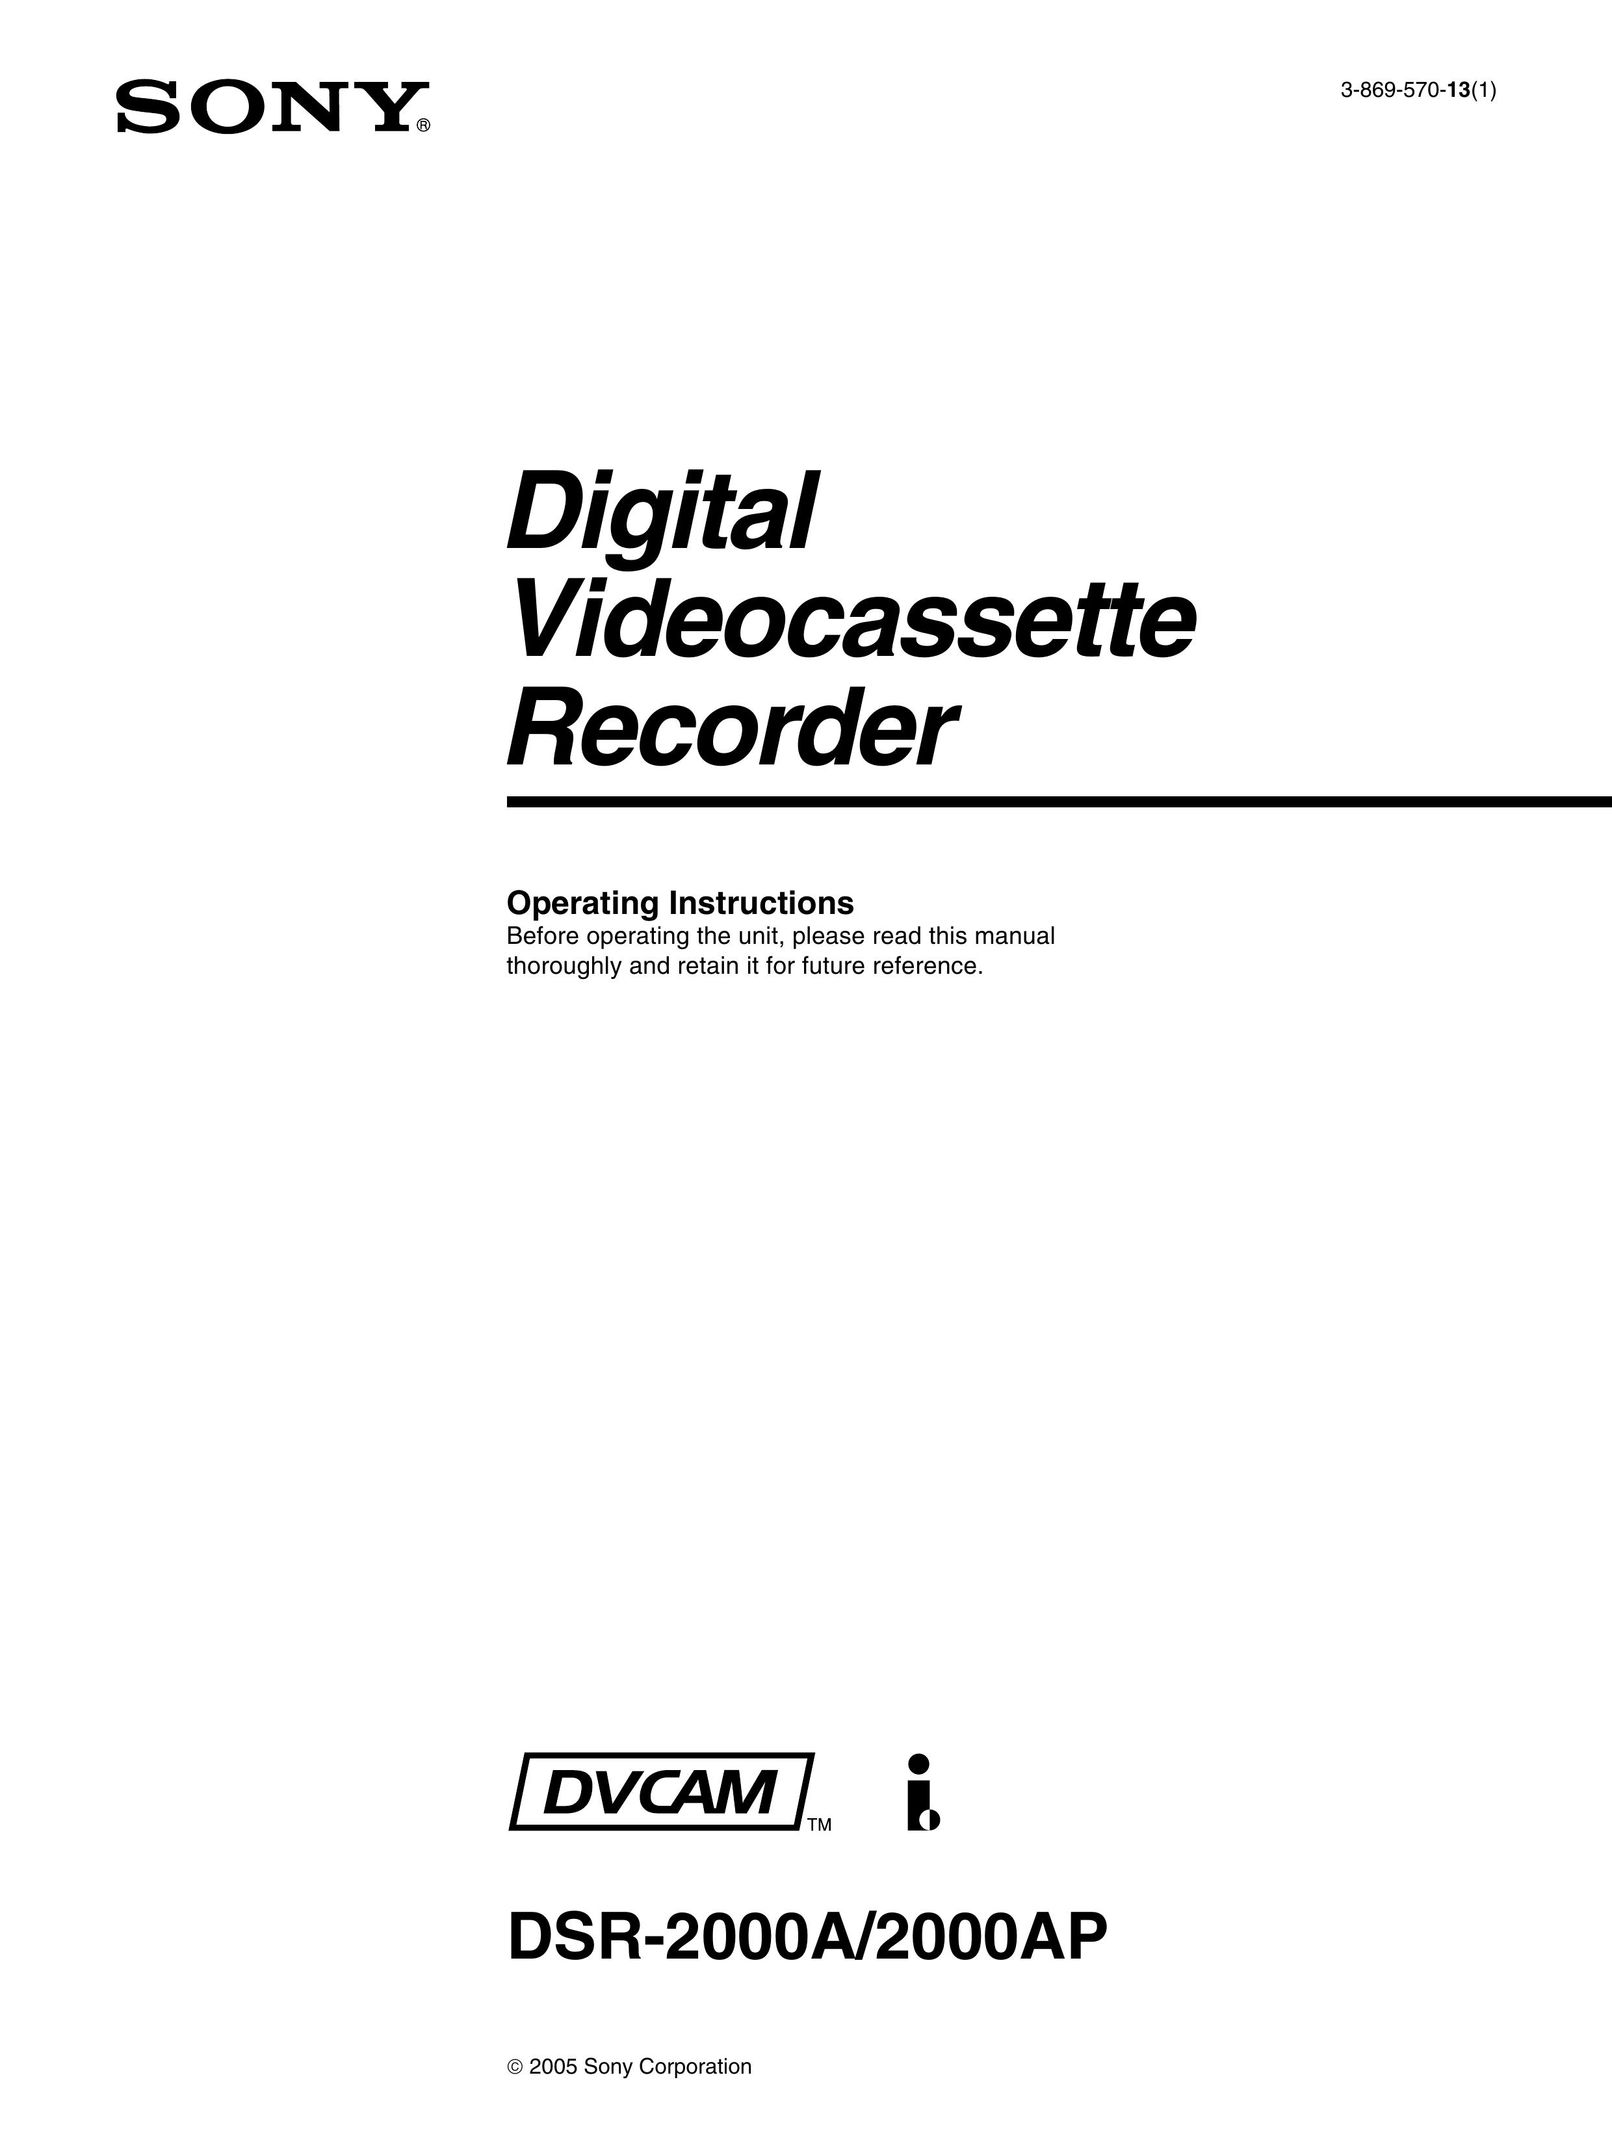 Sony DSR-2000A VCR User Manual